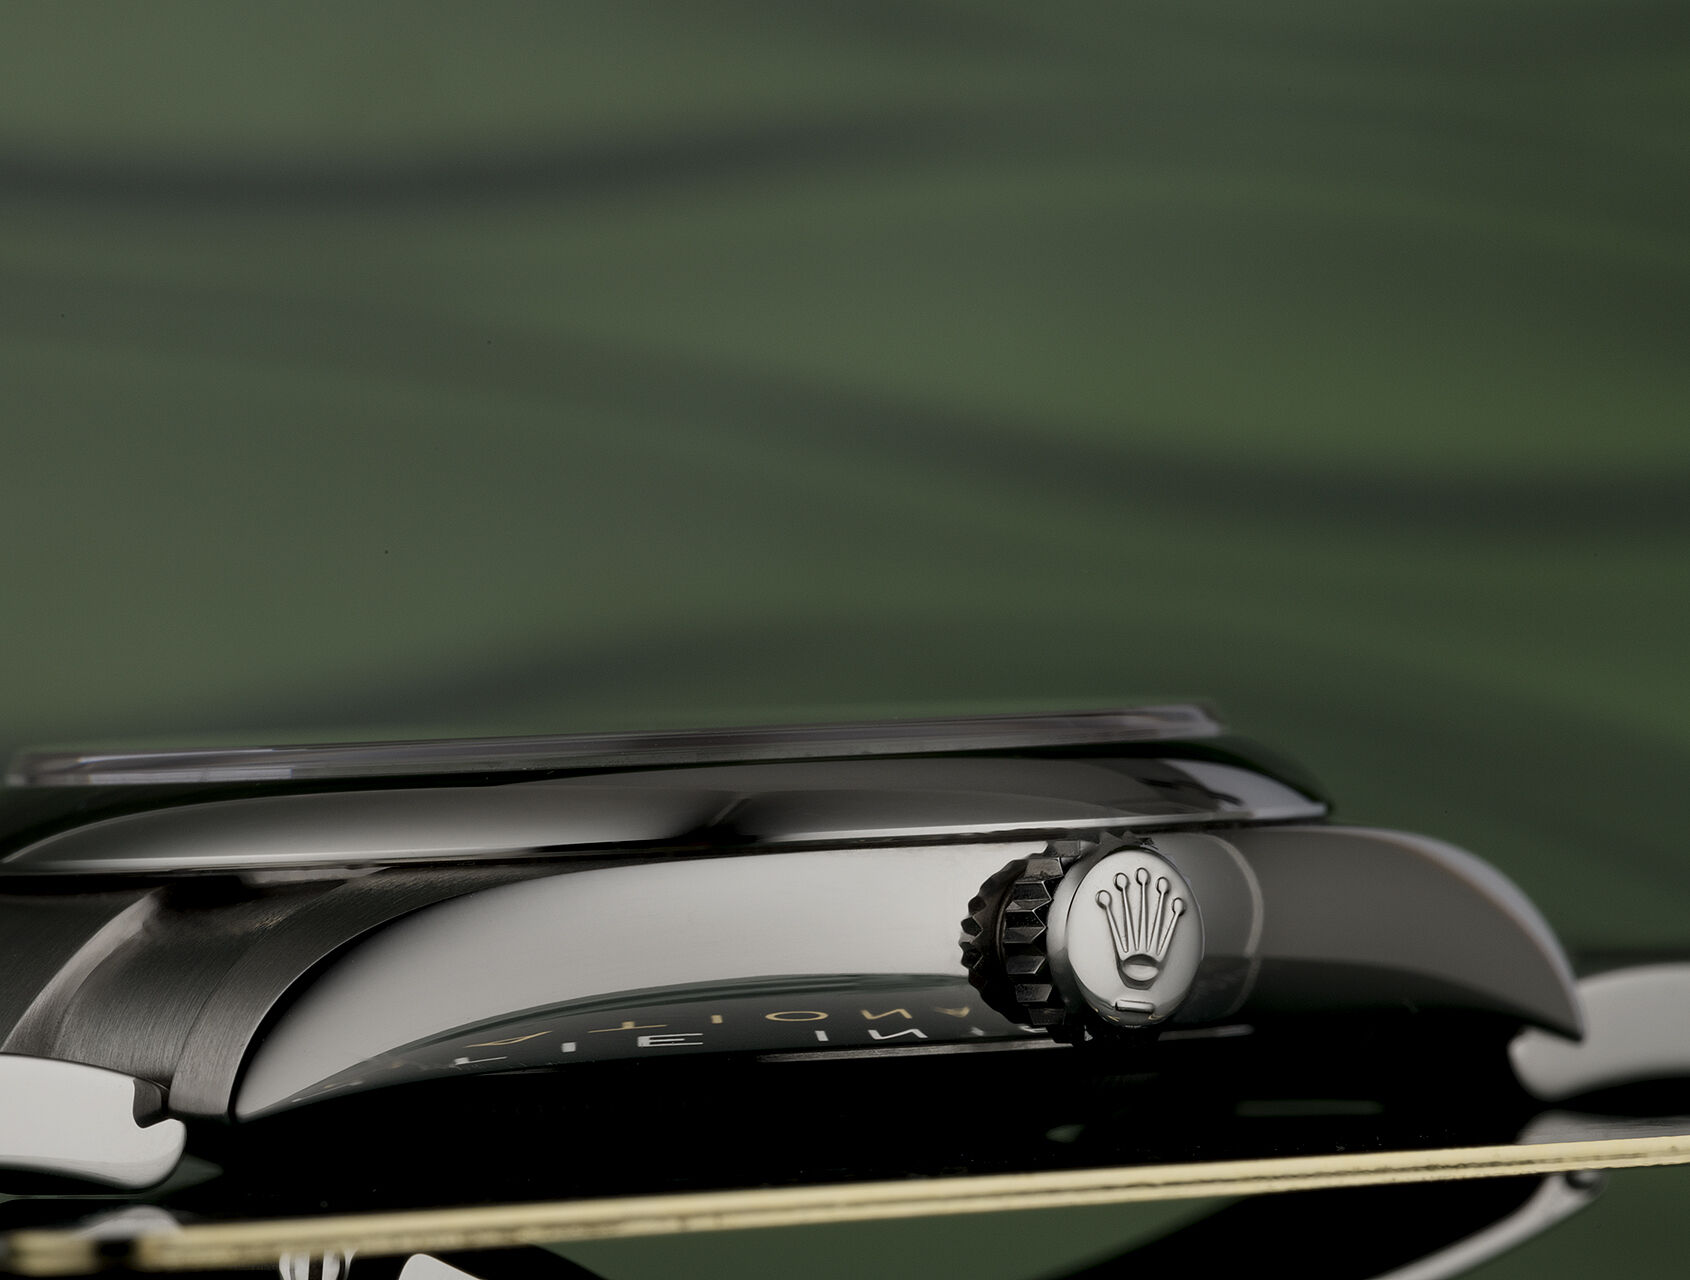 ref 124300 | 124300 - Rolex Warranty to 2026 | Rolex Oyster Perpetual